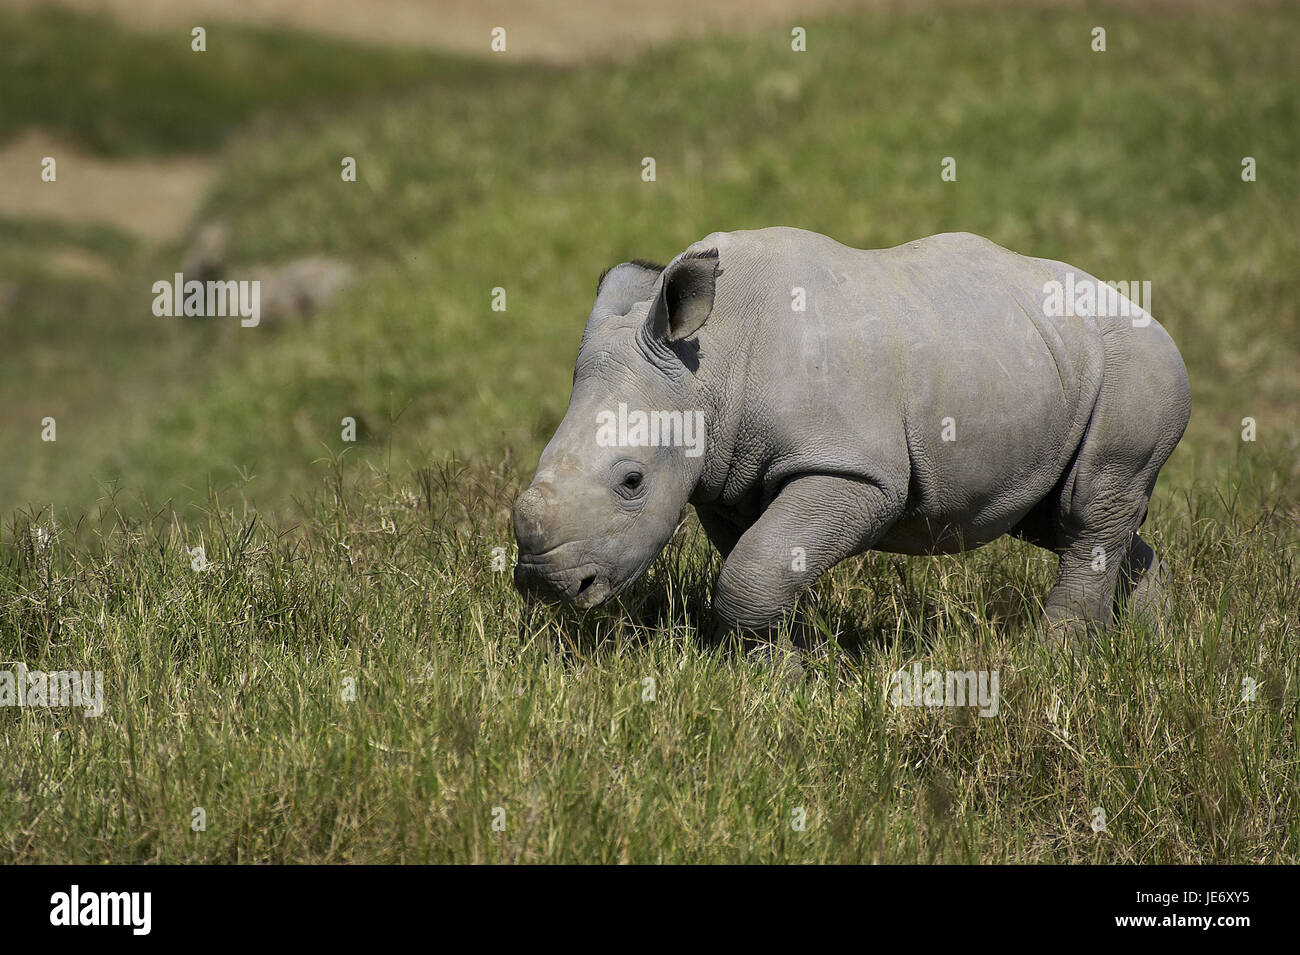 A bocca larga rinoceronte, Ceratotherium simum, femmine, di vitello, di Nakuru park, Kenya, Foto Stock